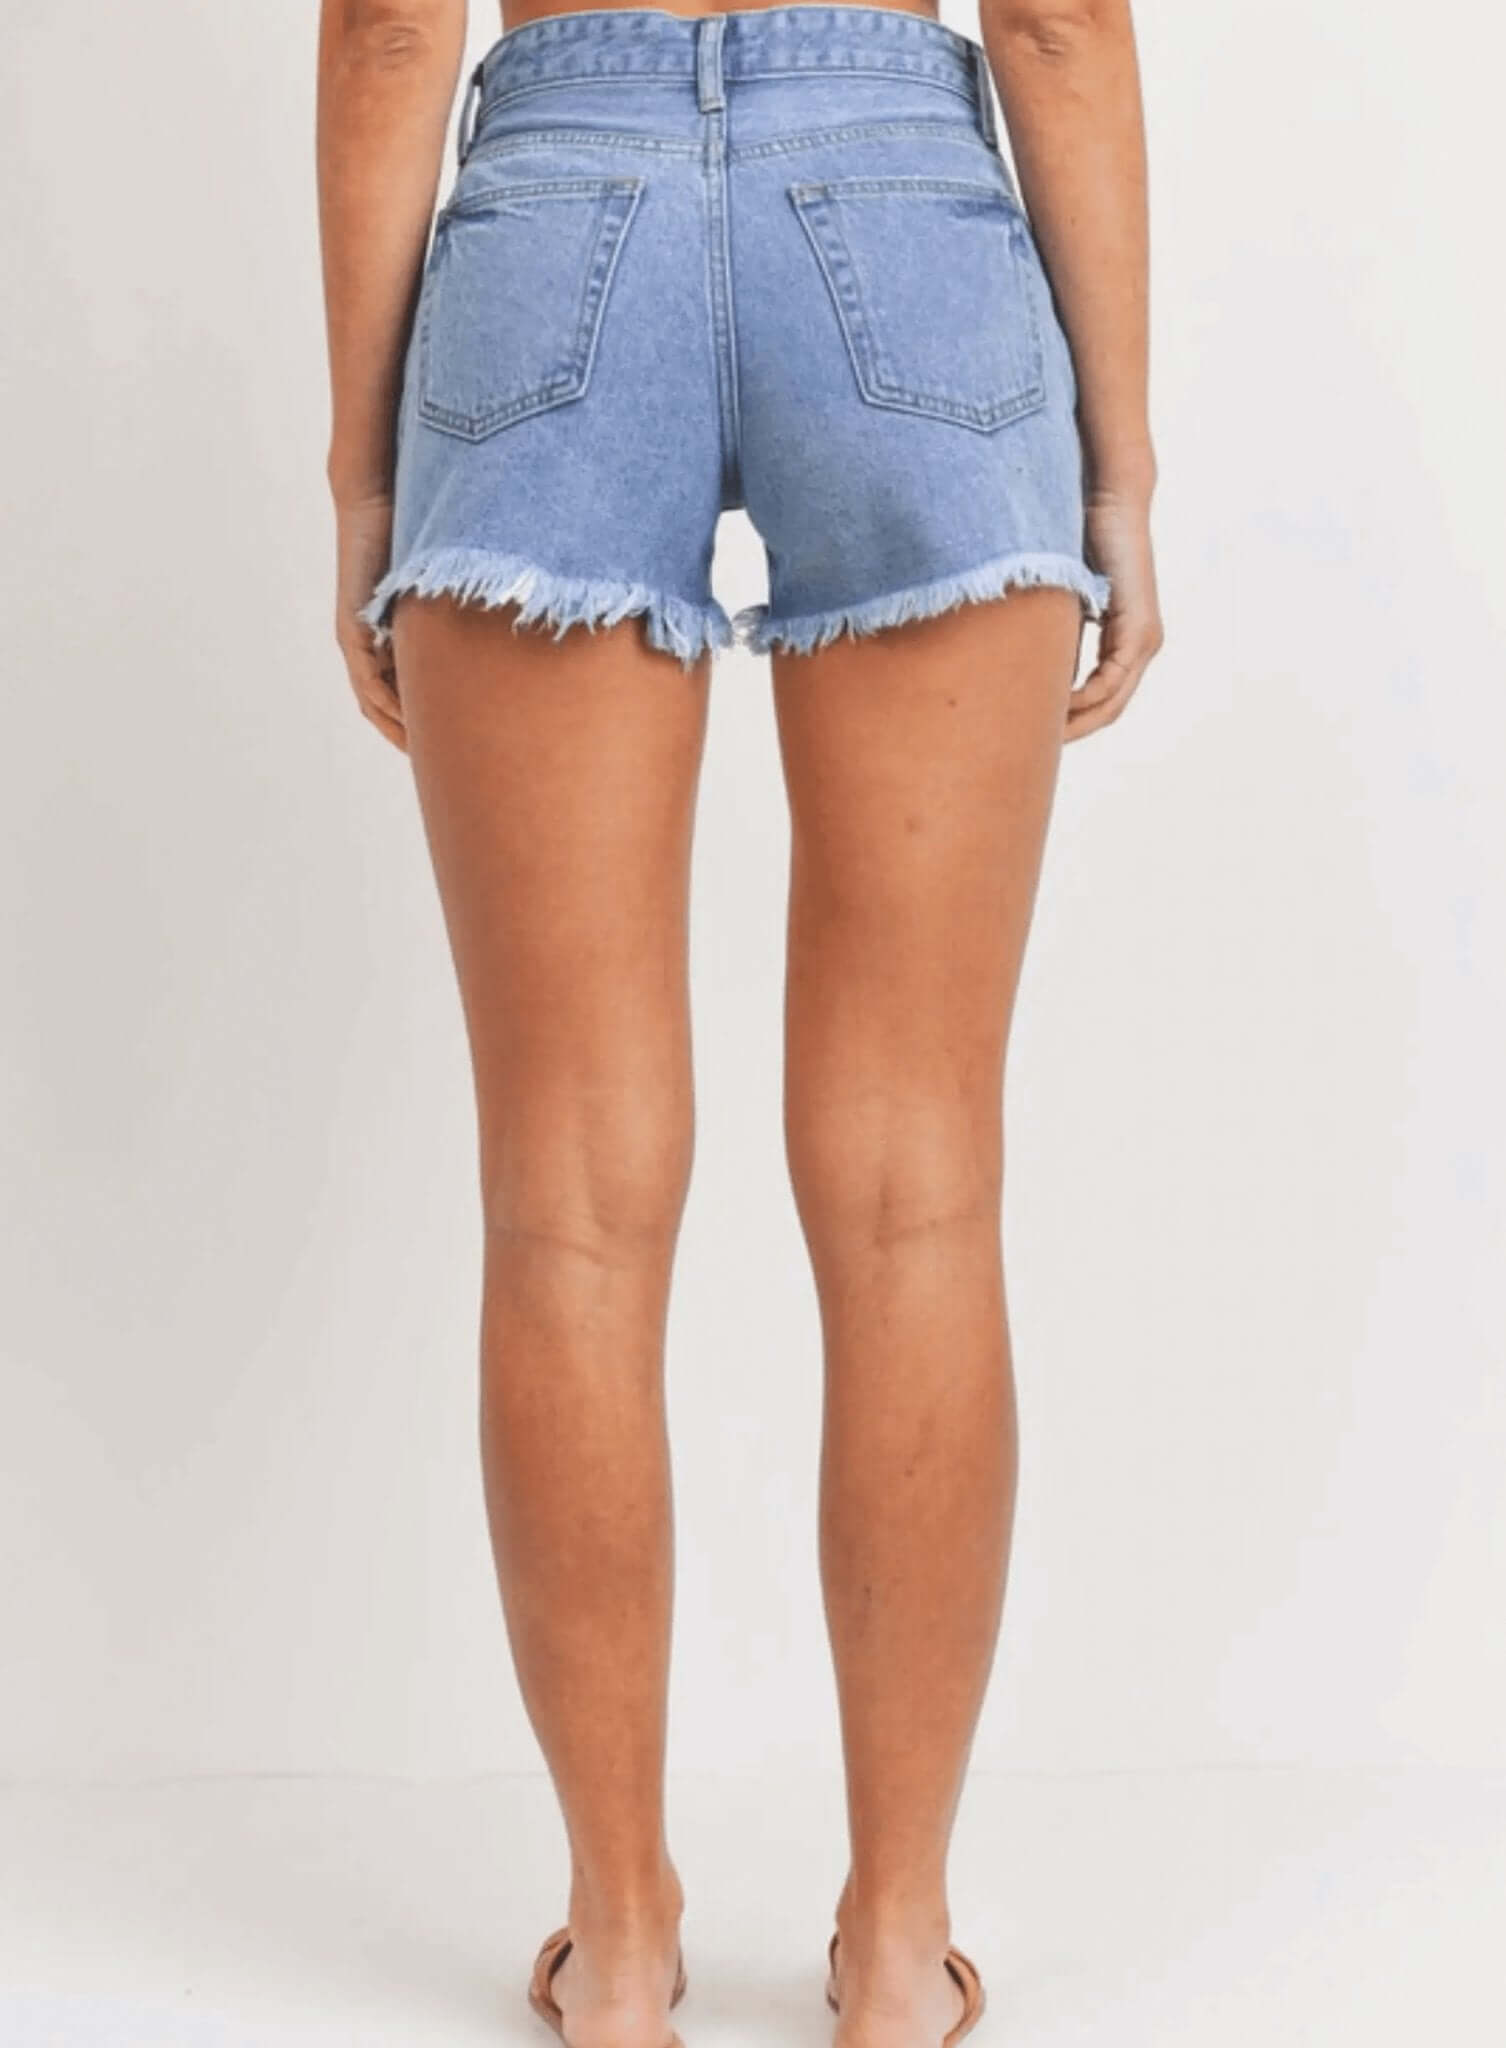 Boyfriend Distressed Jeans Shorts - Rocca & Co